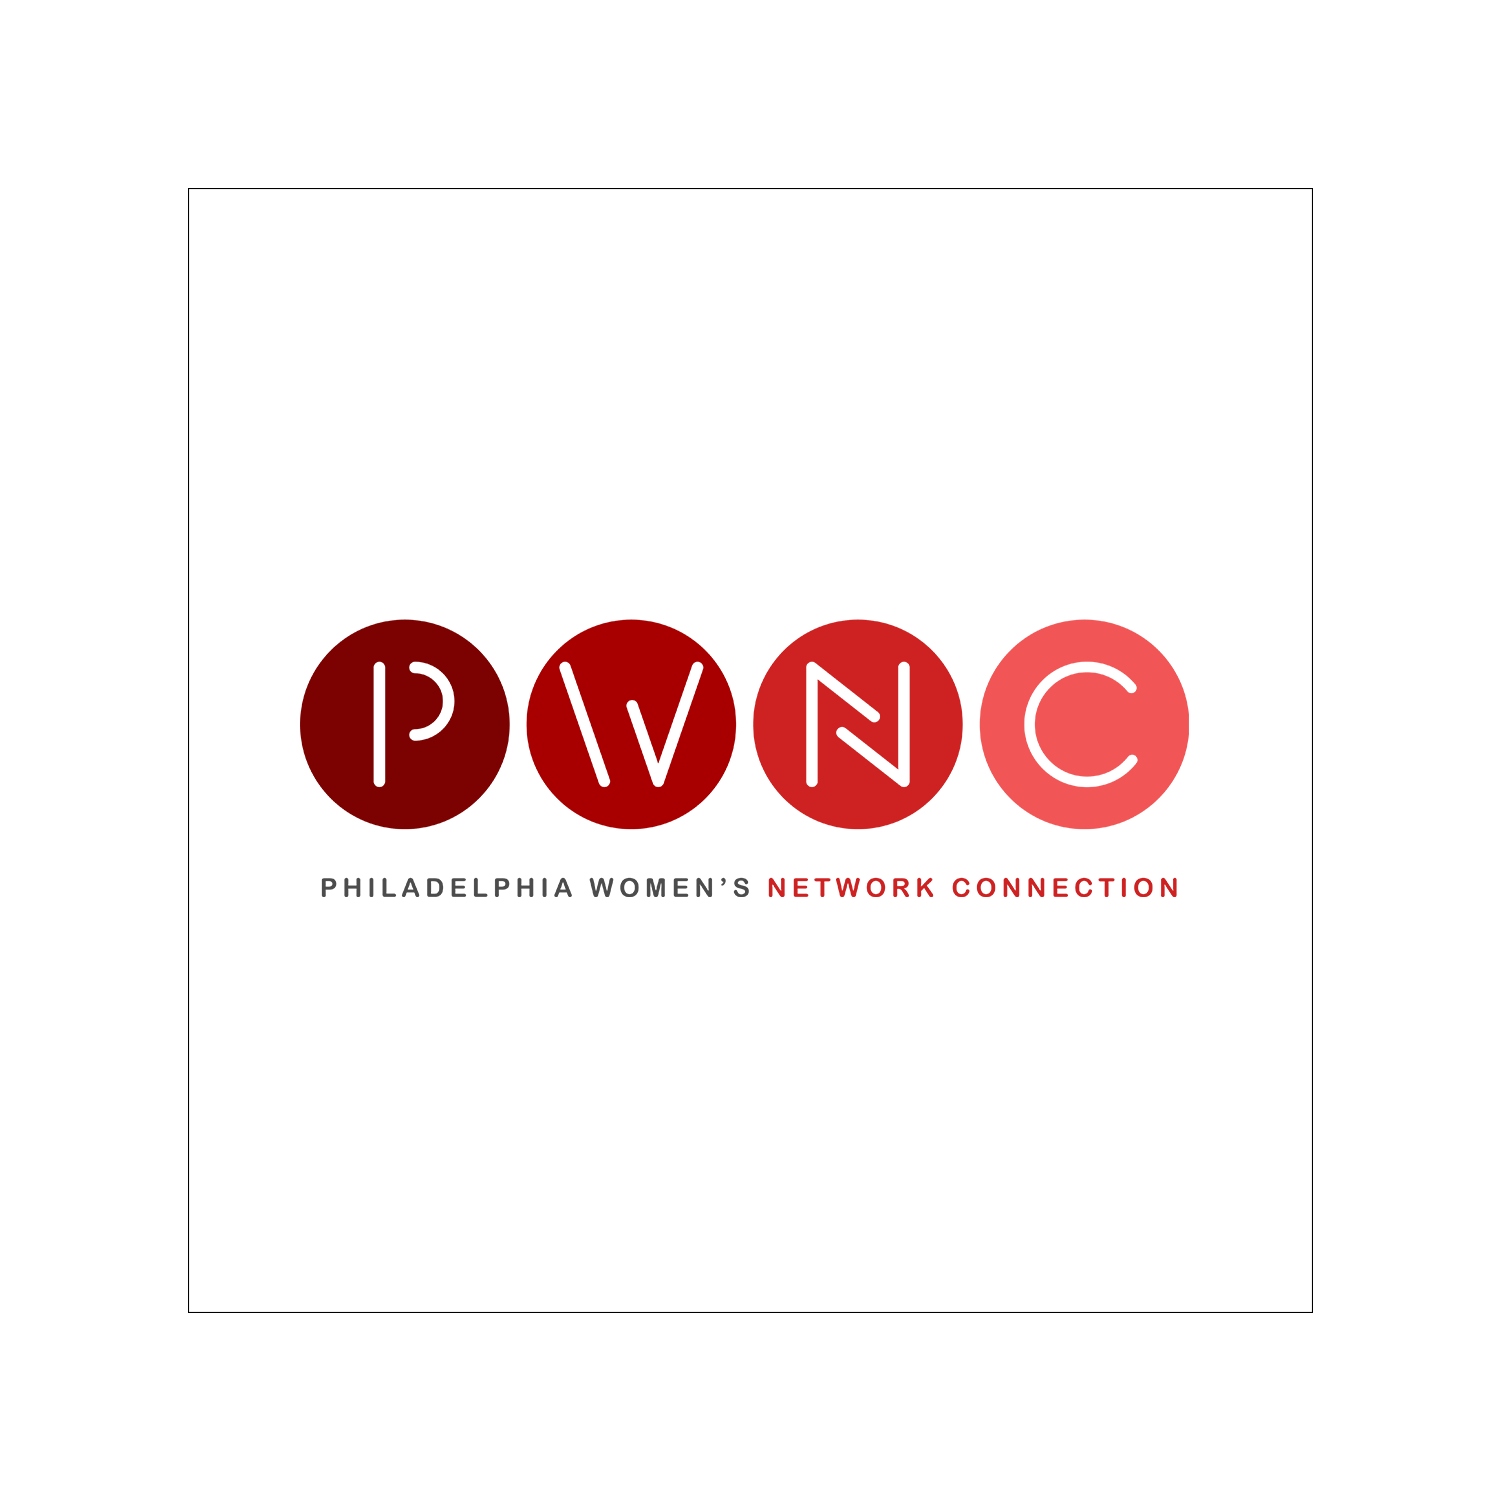 Philadelphia Women's Network Connection